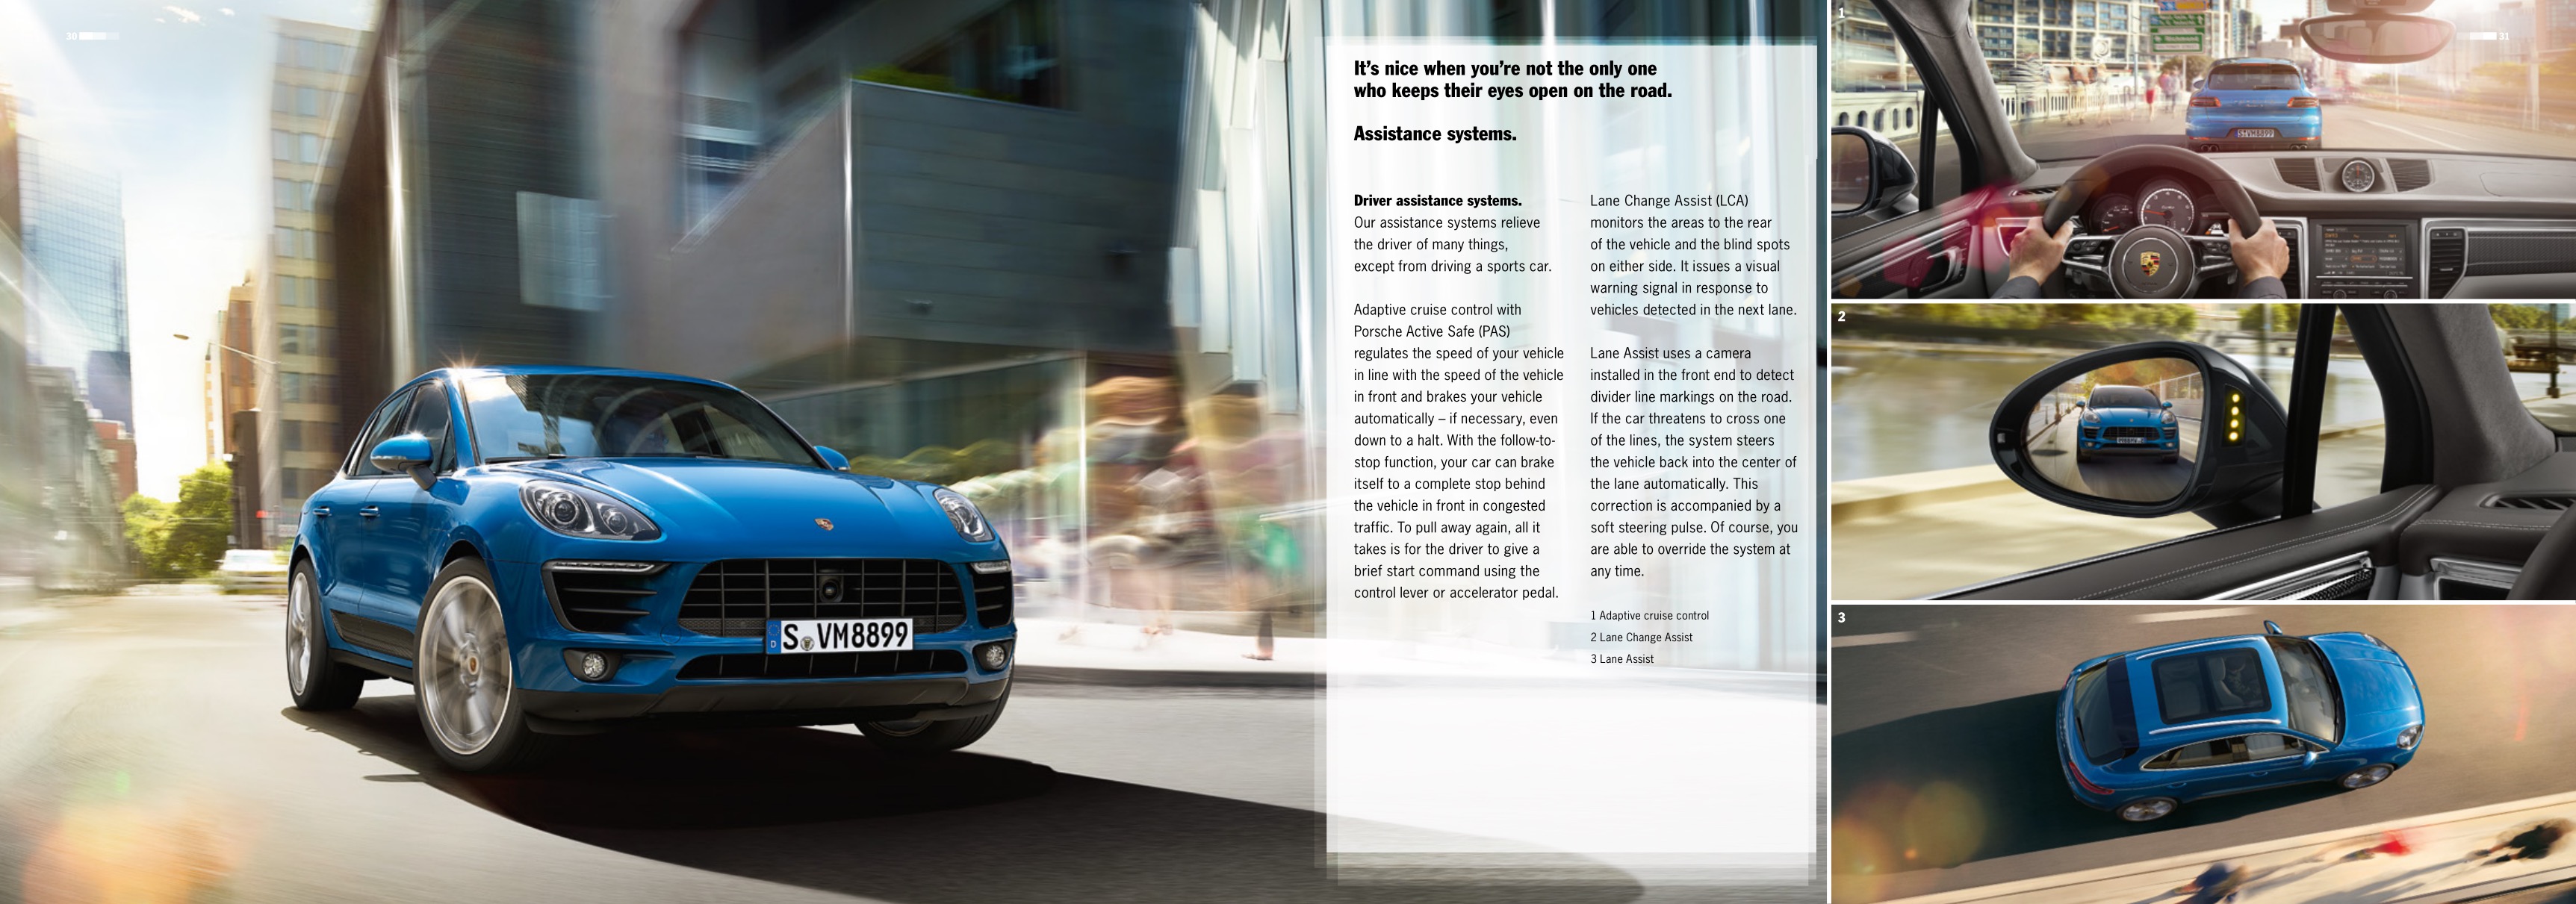 2014 Porsche Macan Brochure Page 22